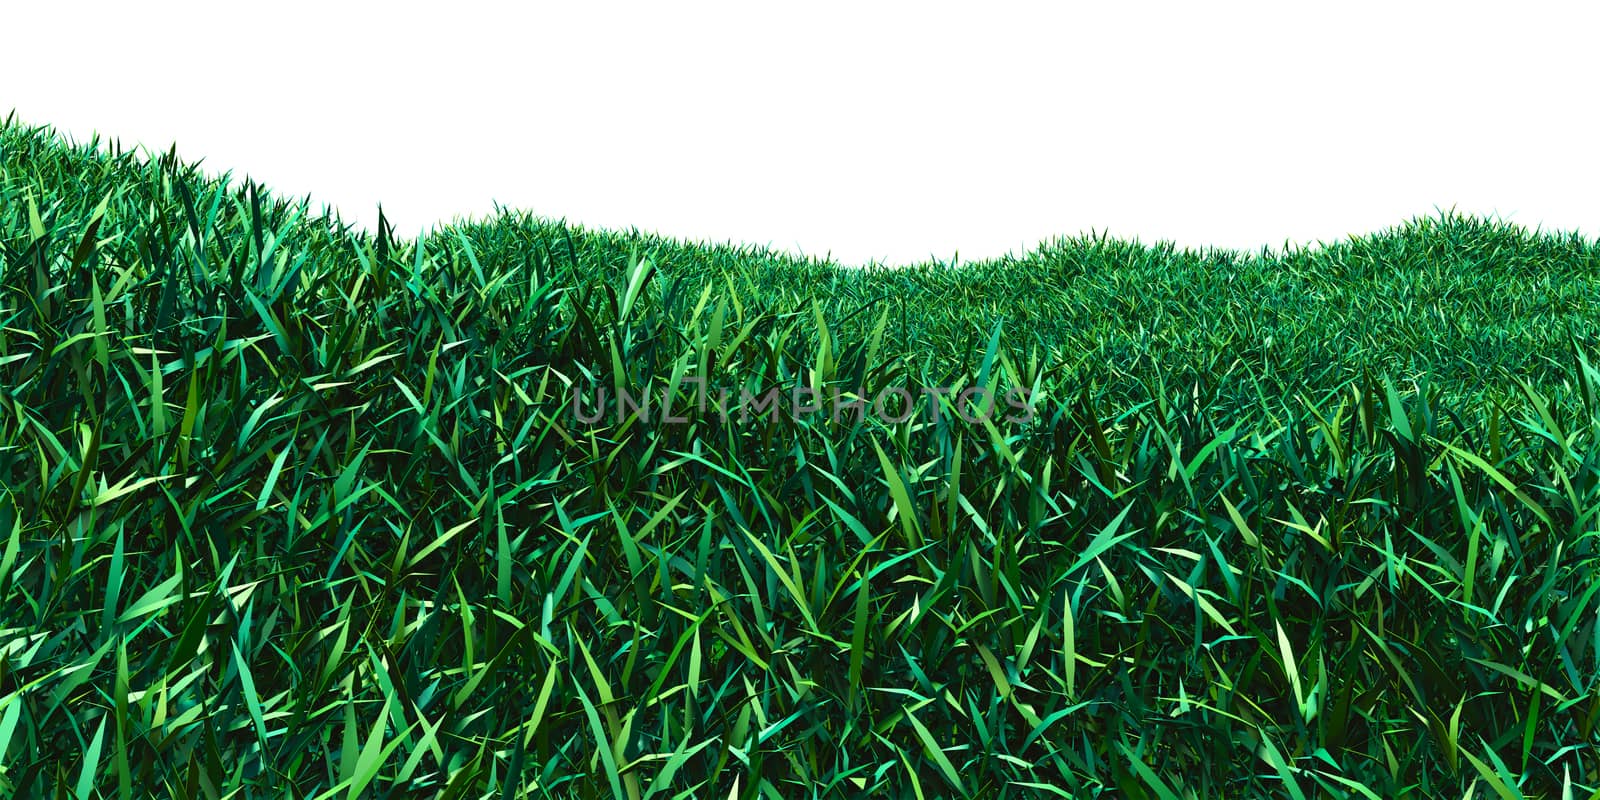 Background image of lush grass field by cherezoff